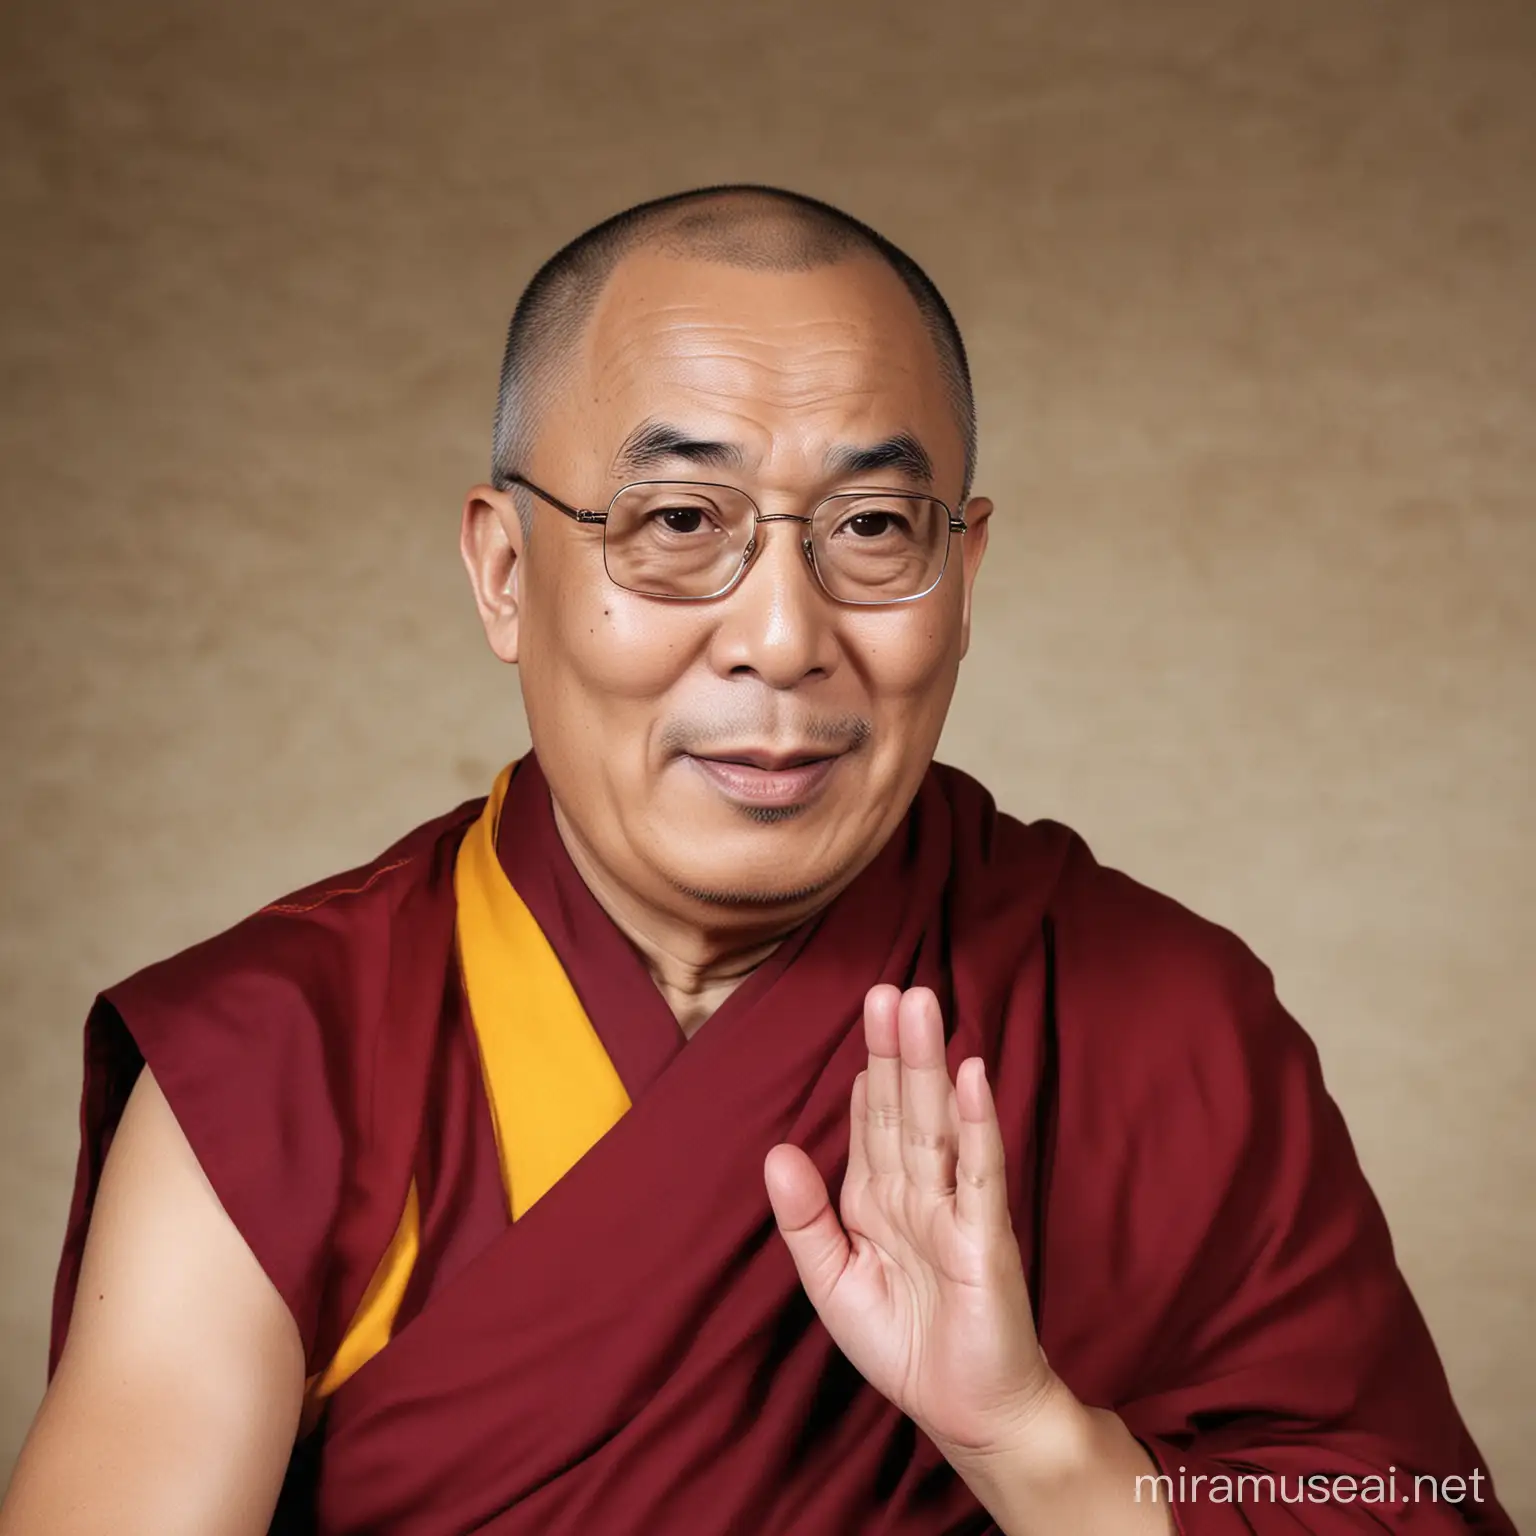 Dalai Lama in Meditation with Himalayan Mountains